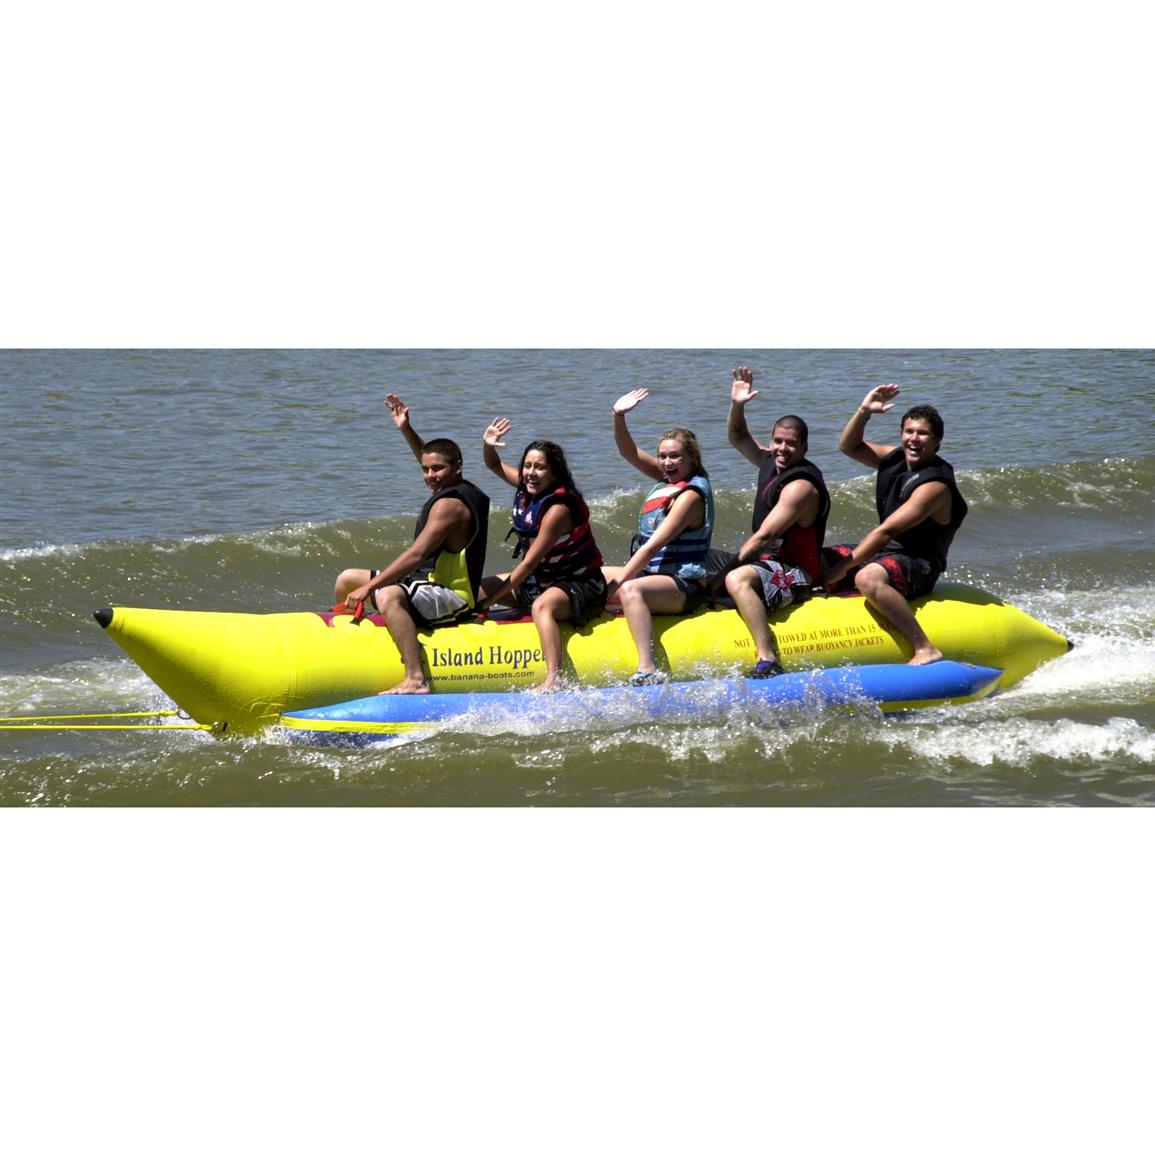 NEW Island Hopper PVC-5 Banana Boat 17' Inflatable 5 Passenger Water Sled 